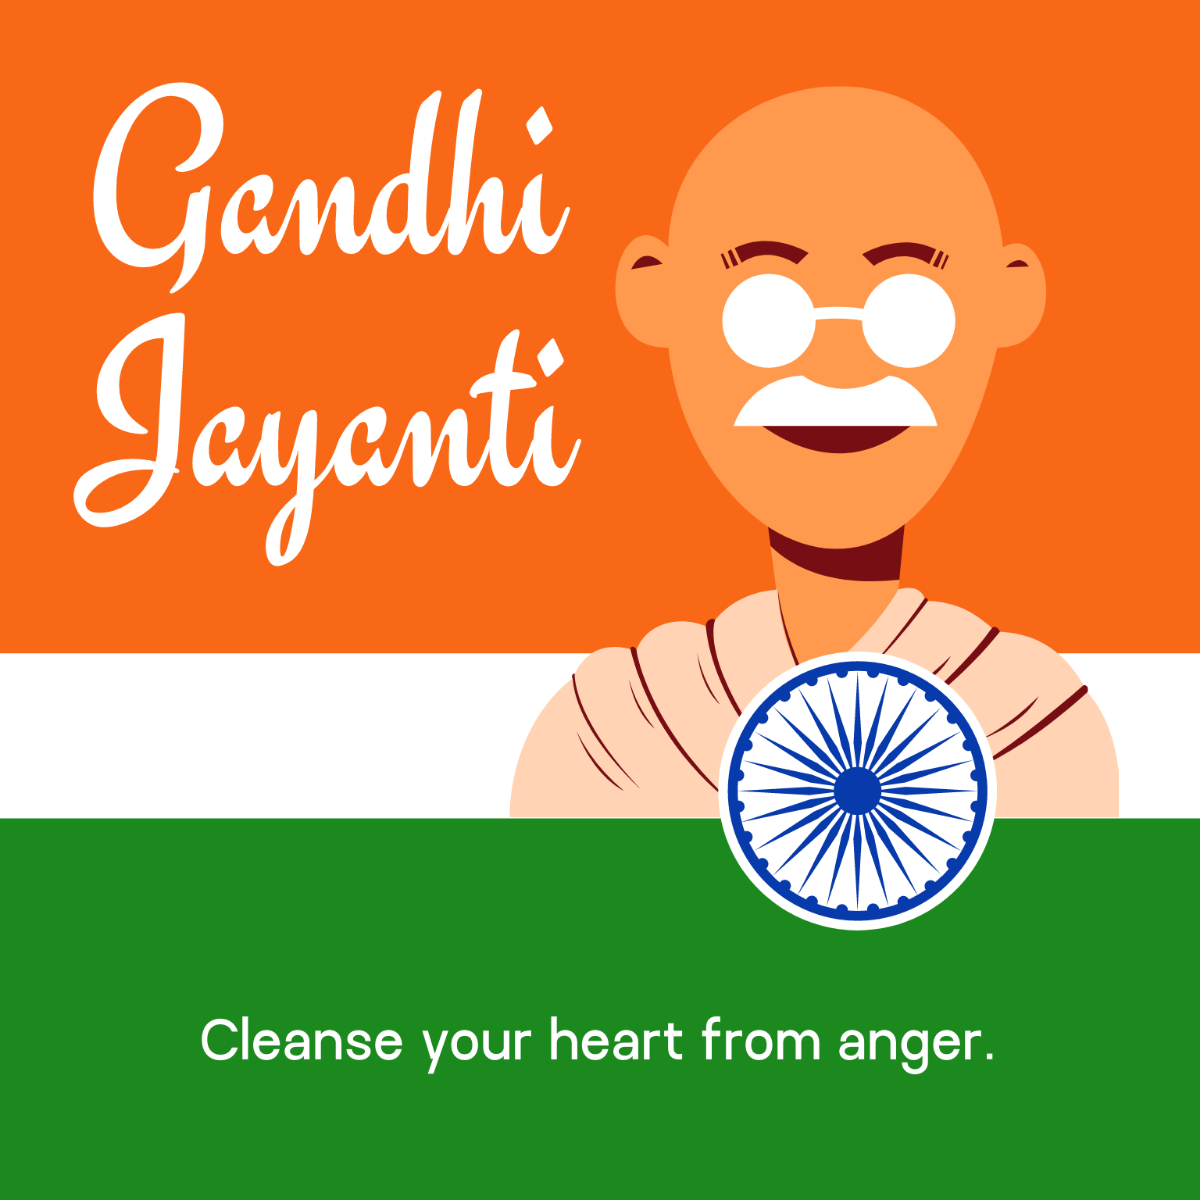 Gandhi Jayanti Poster Vector